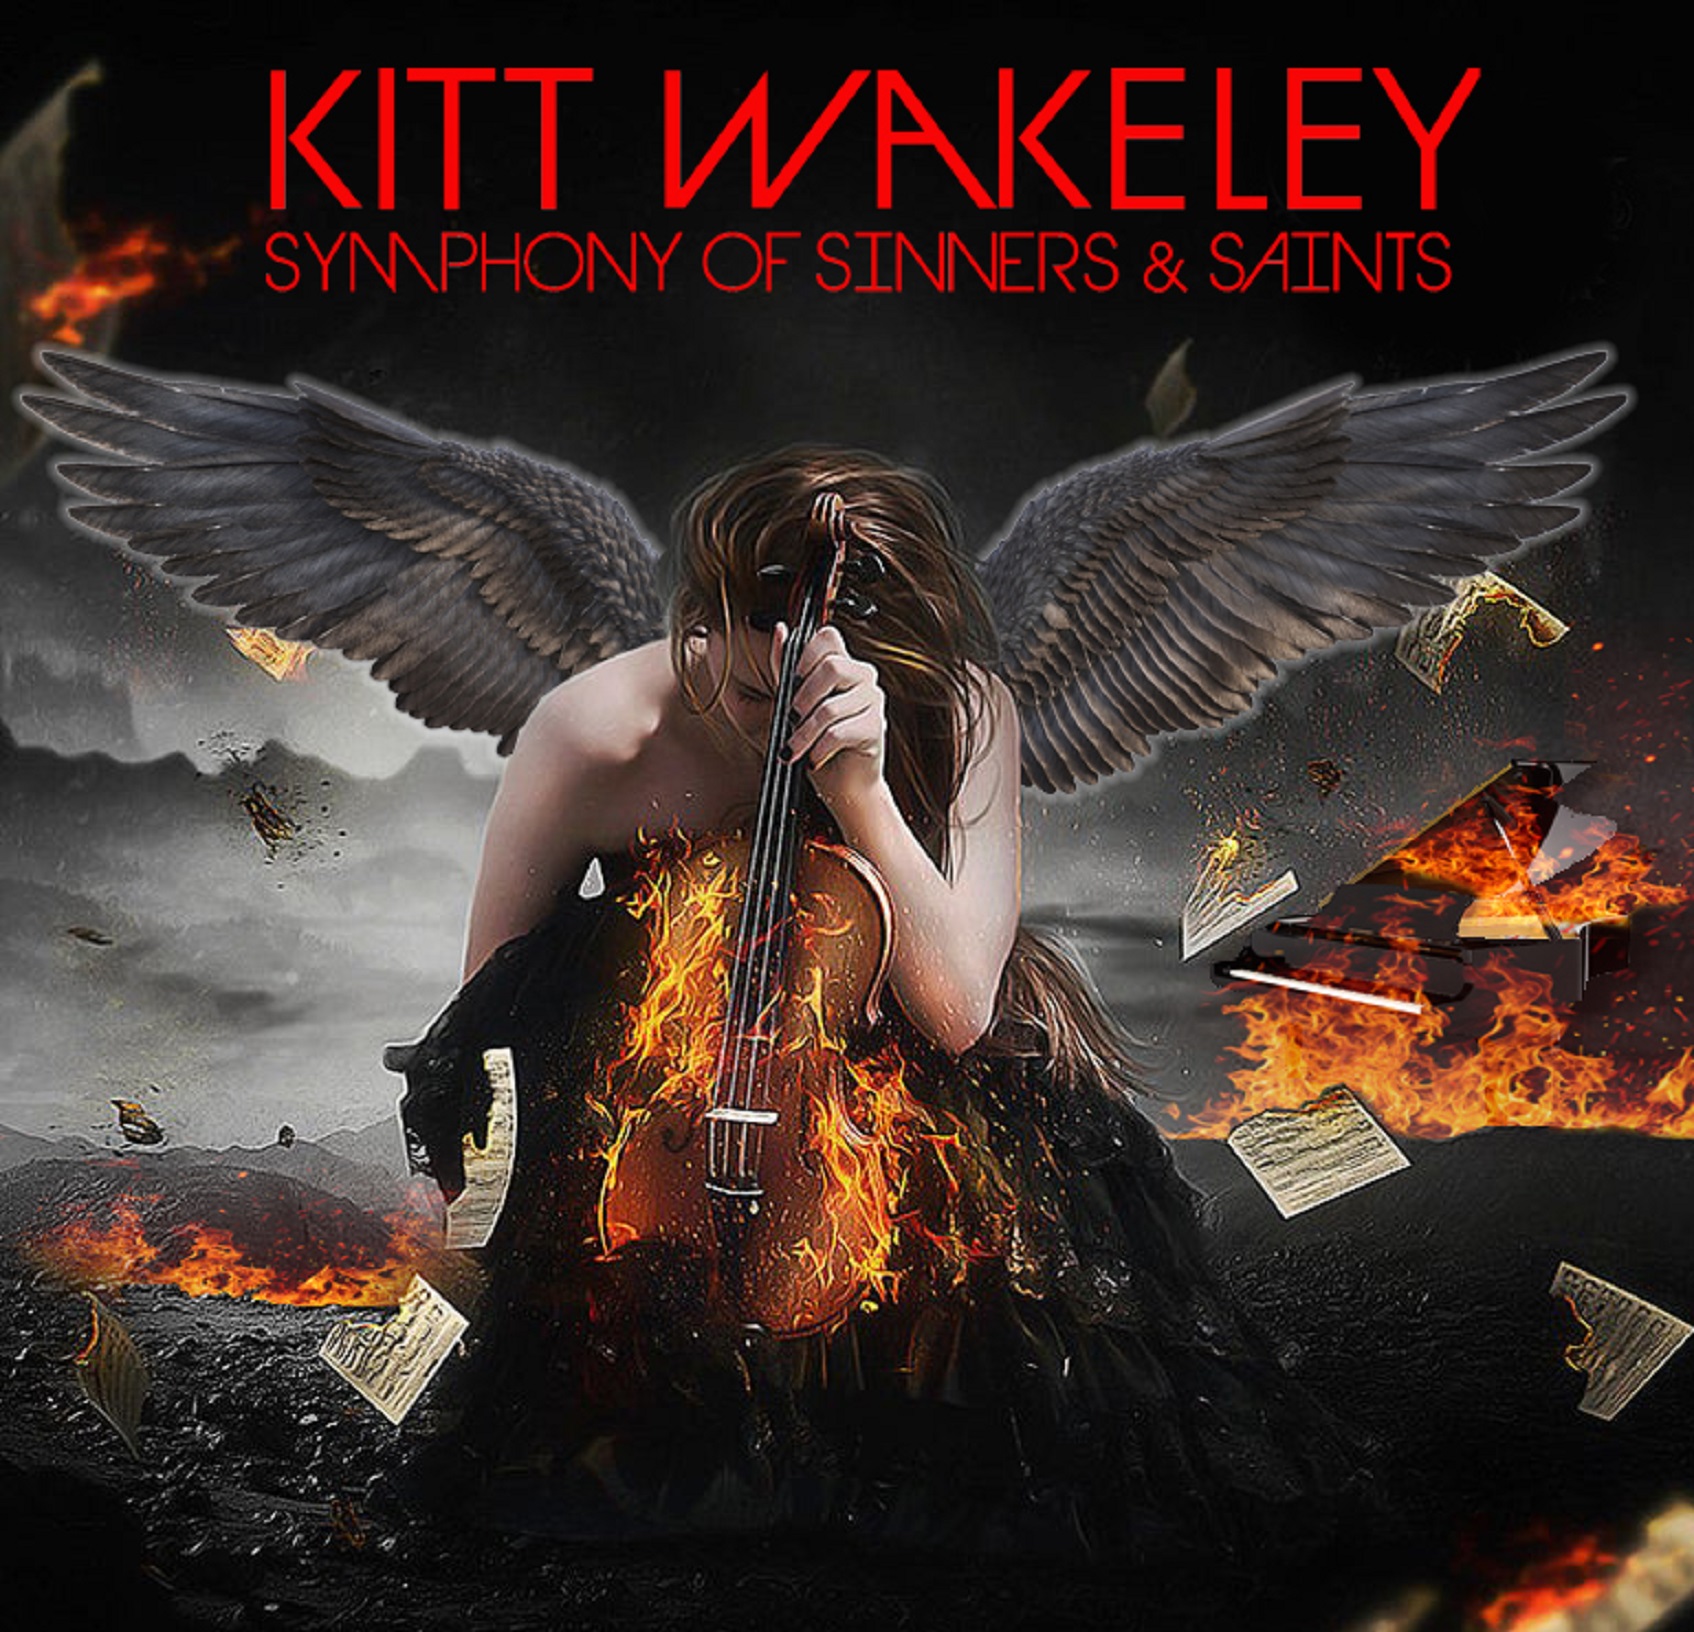 Kitt Wakeley’s single “Conflicted” features Joe Satriani, UK’s Royal Philharmonic Orchestra & more